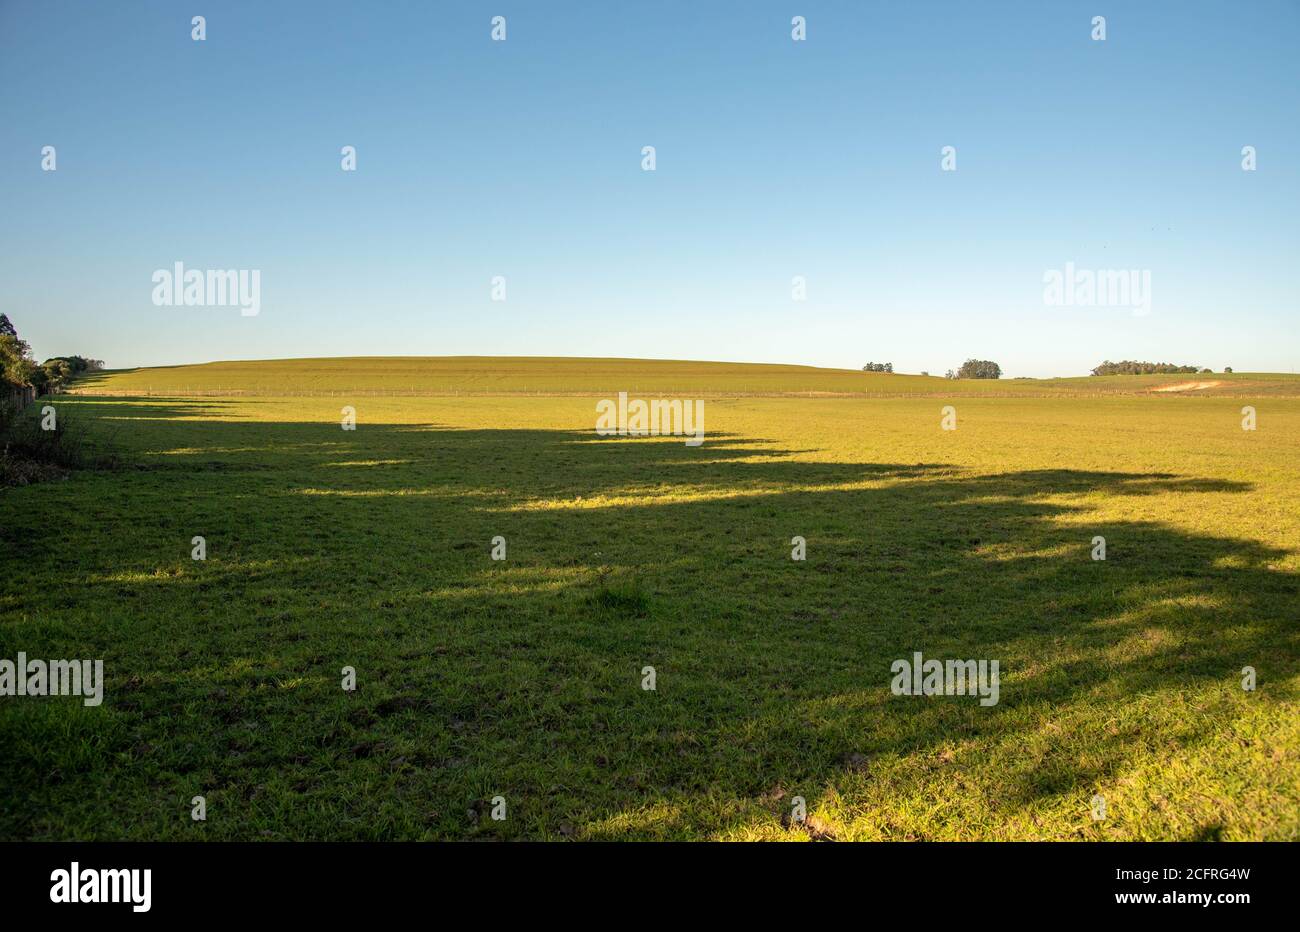 Farm fields in southern Brazil. cattle breeding area. Pasture fields. Small cattle ranching property. Rural landscape. Stock Photo